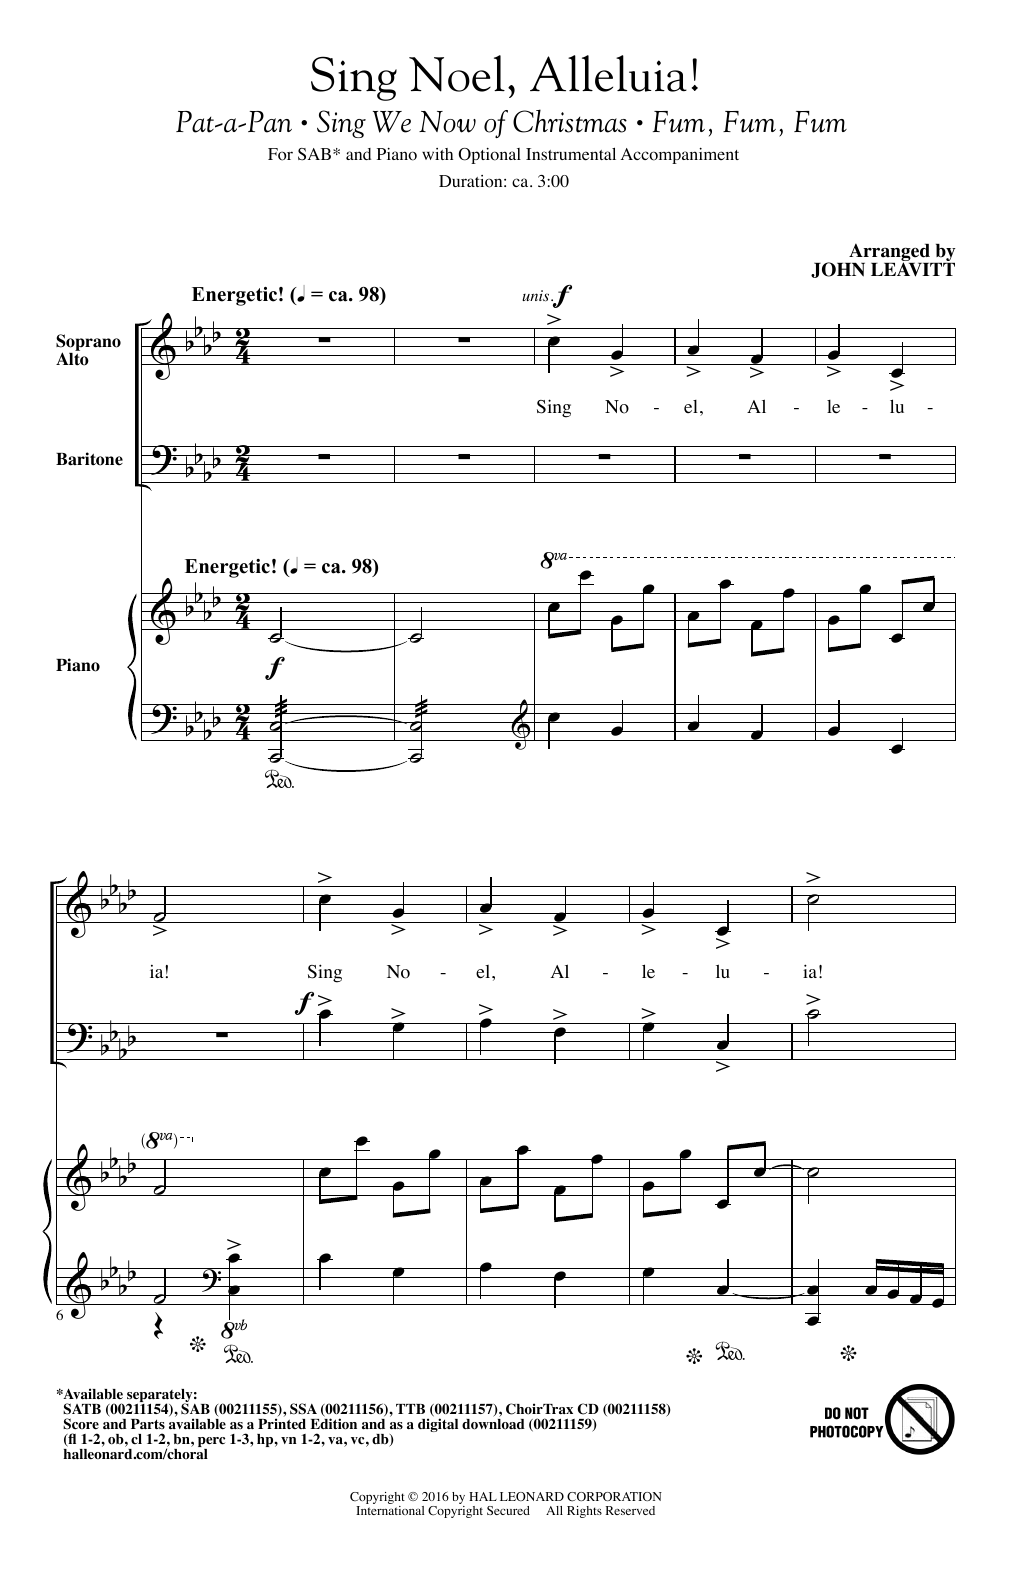 Download John Leavitt Sing Noel, Alleluia! Sheet Music and learn how to play SSA PDF digital score in minutes